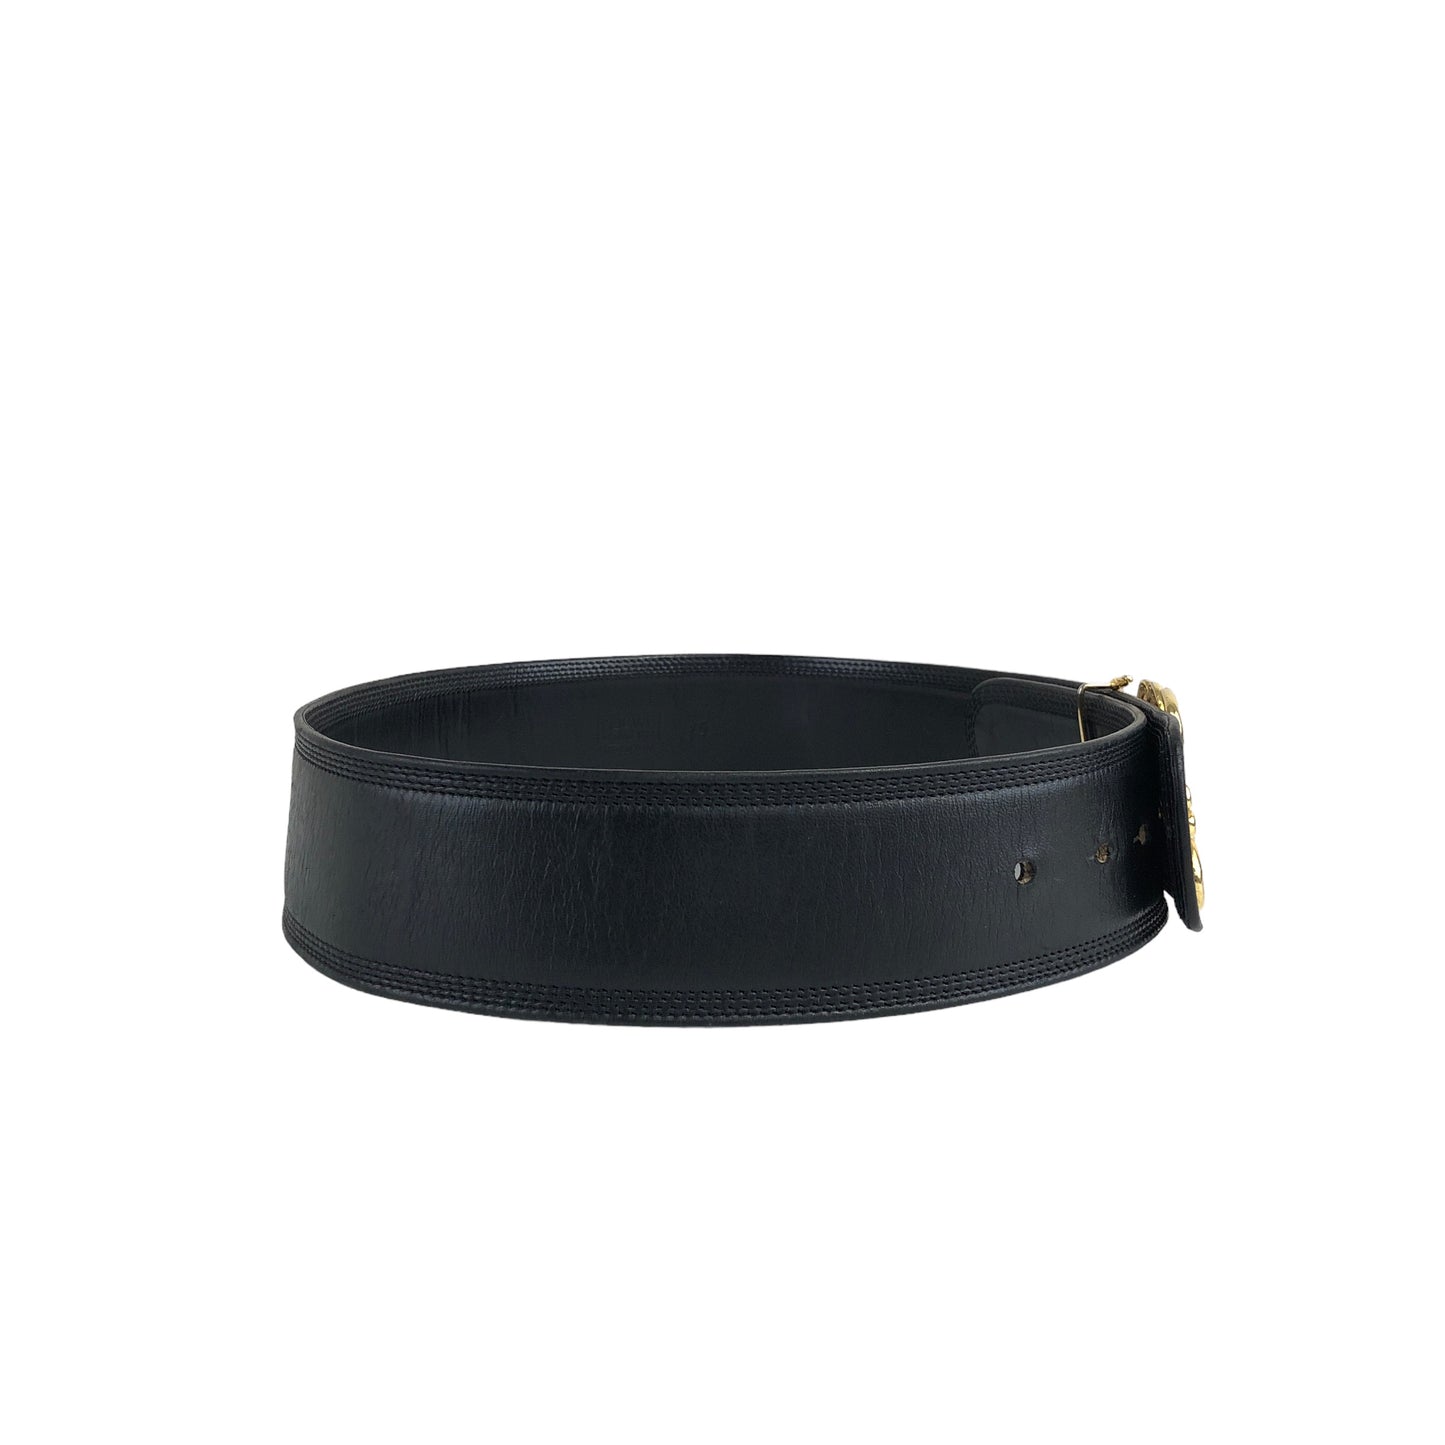 LOEWE Anagram Leather Belt Black Vintage uszftn